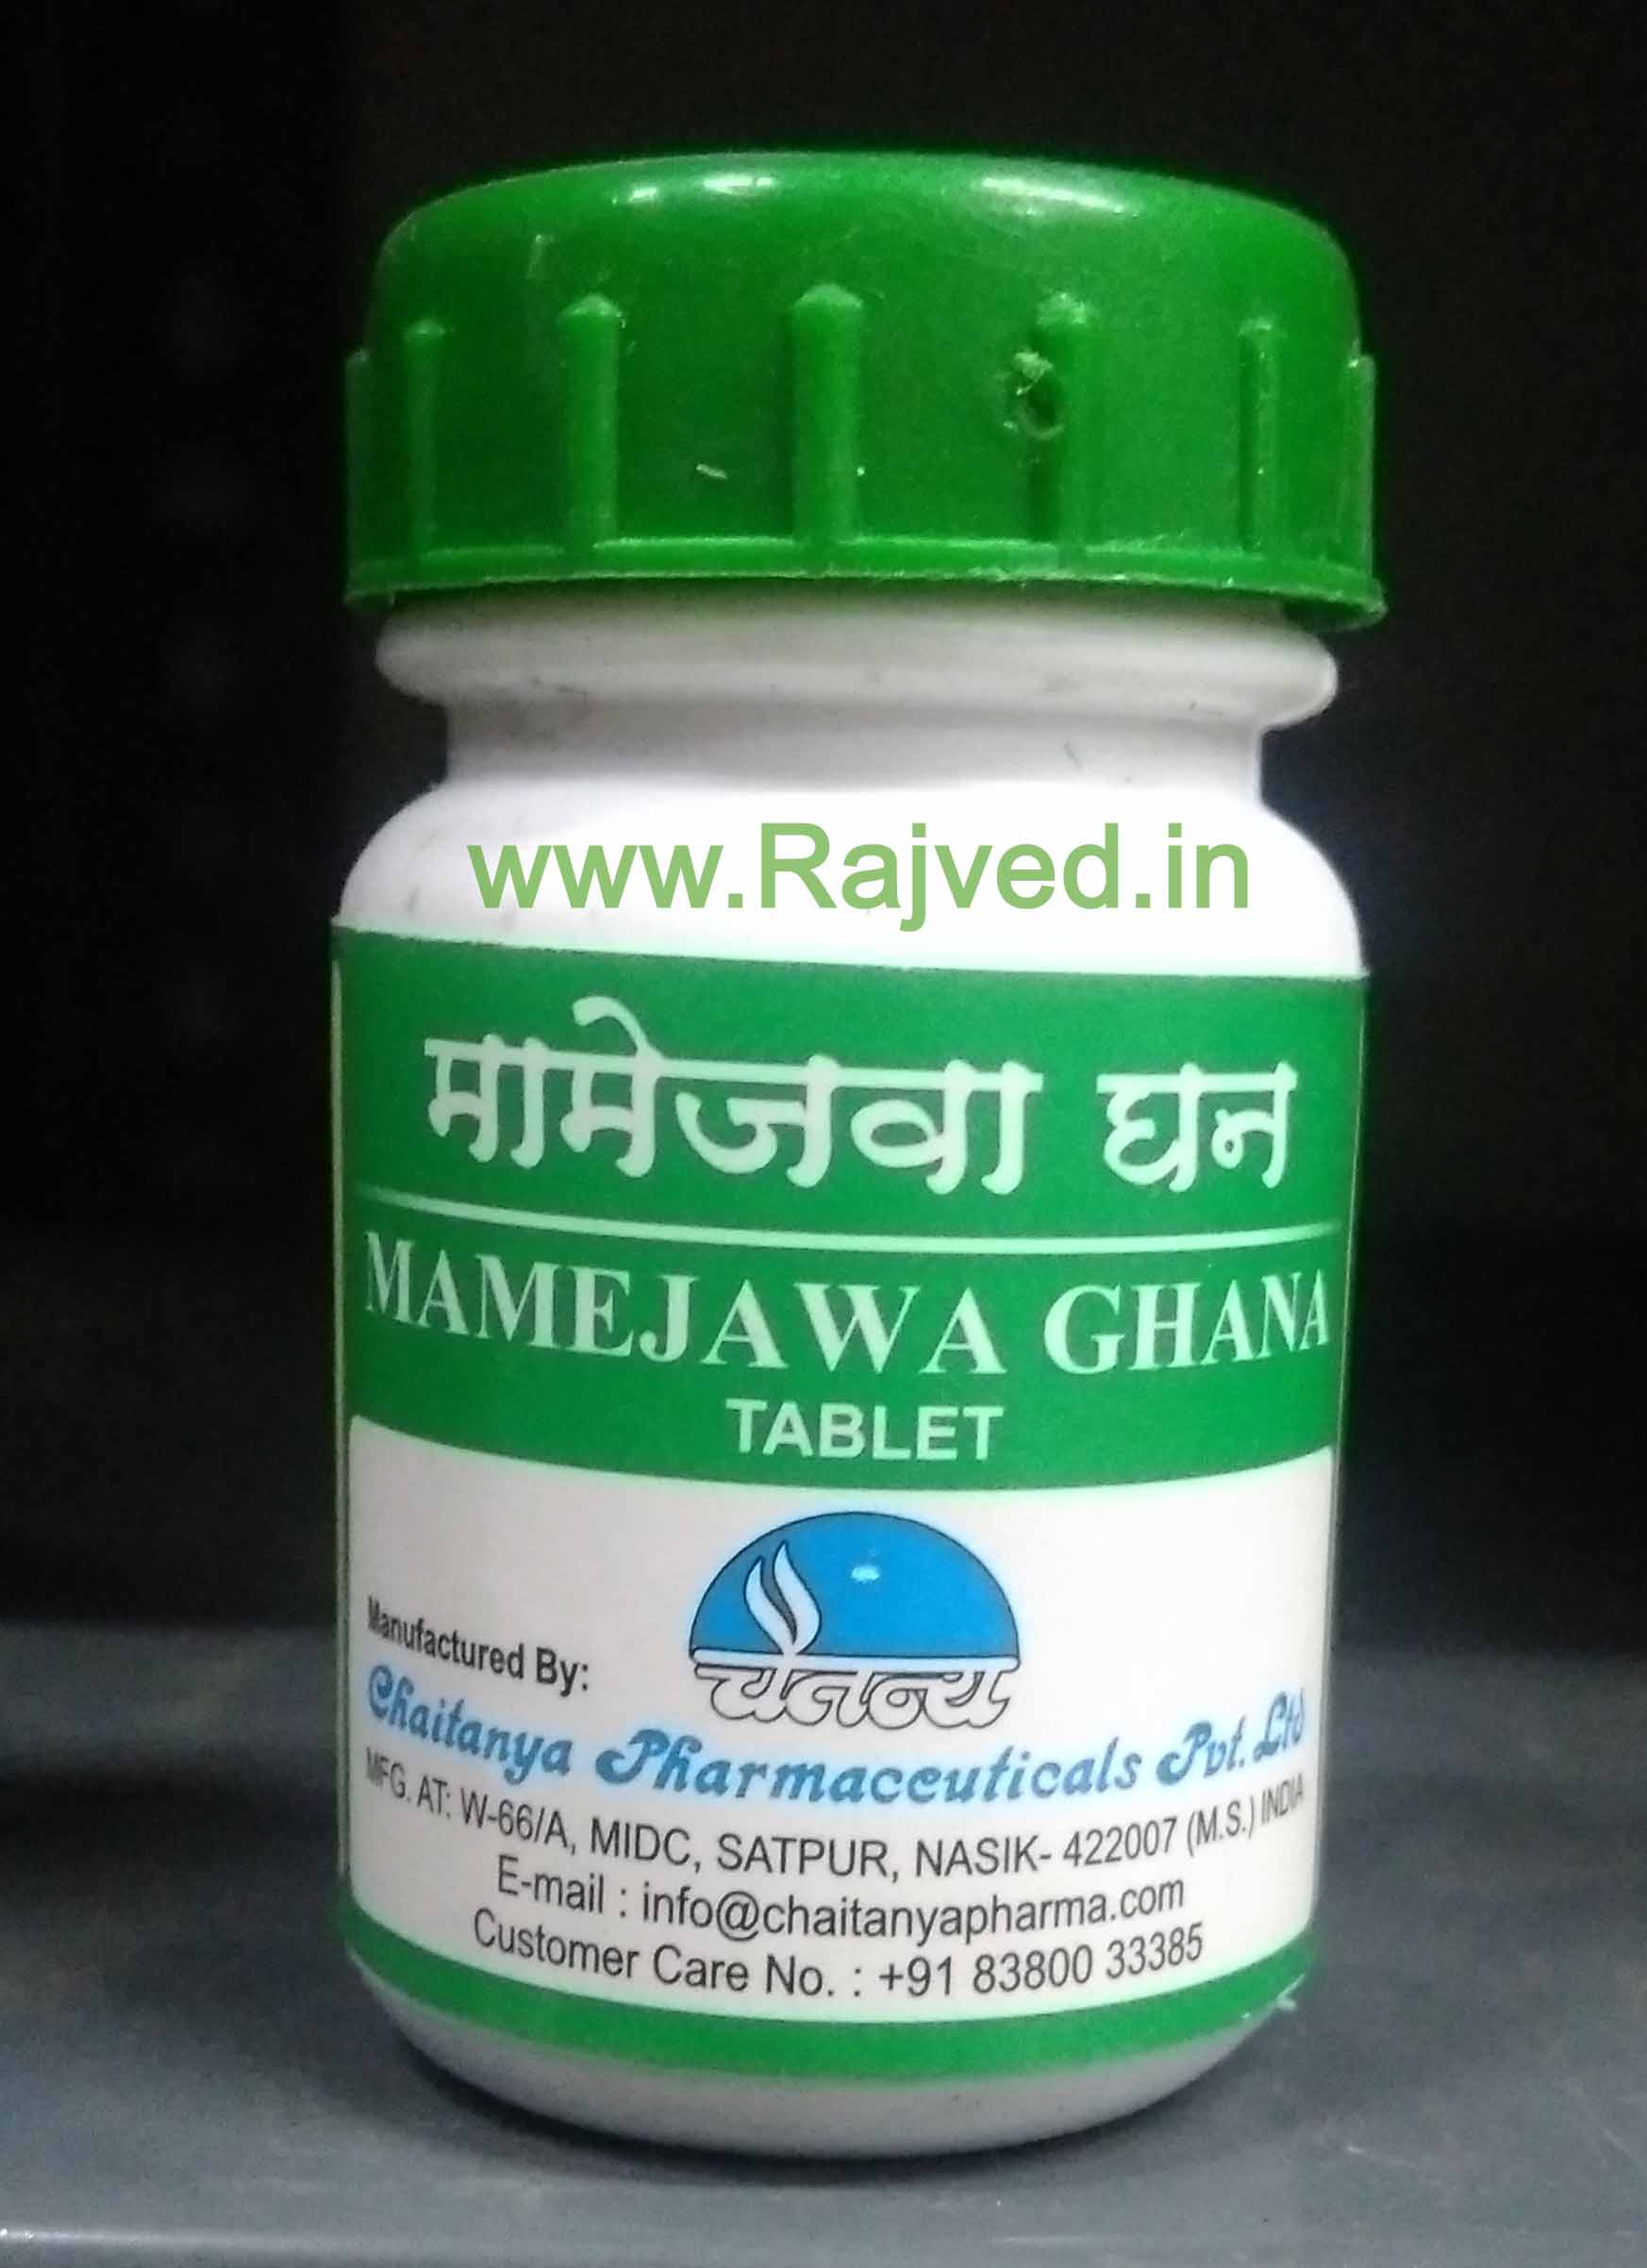 mamejawa ghana 500tab upto 20% off free shipping chaitanya pharmaceuticals